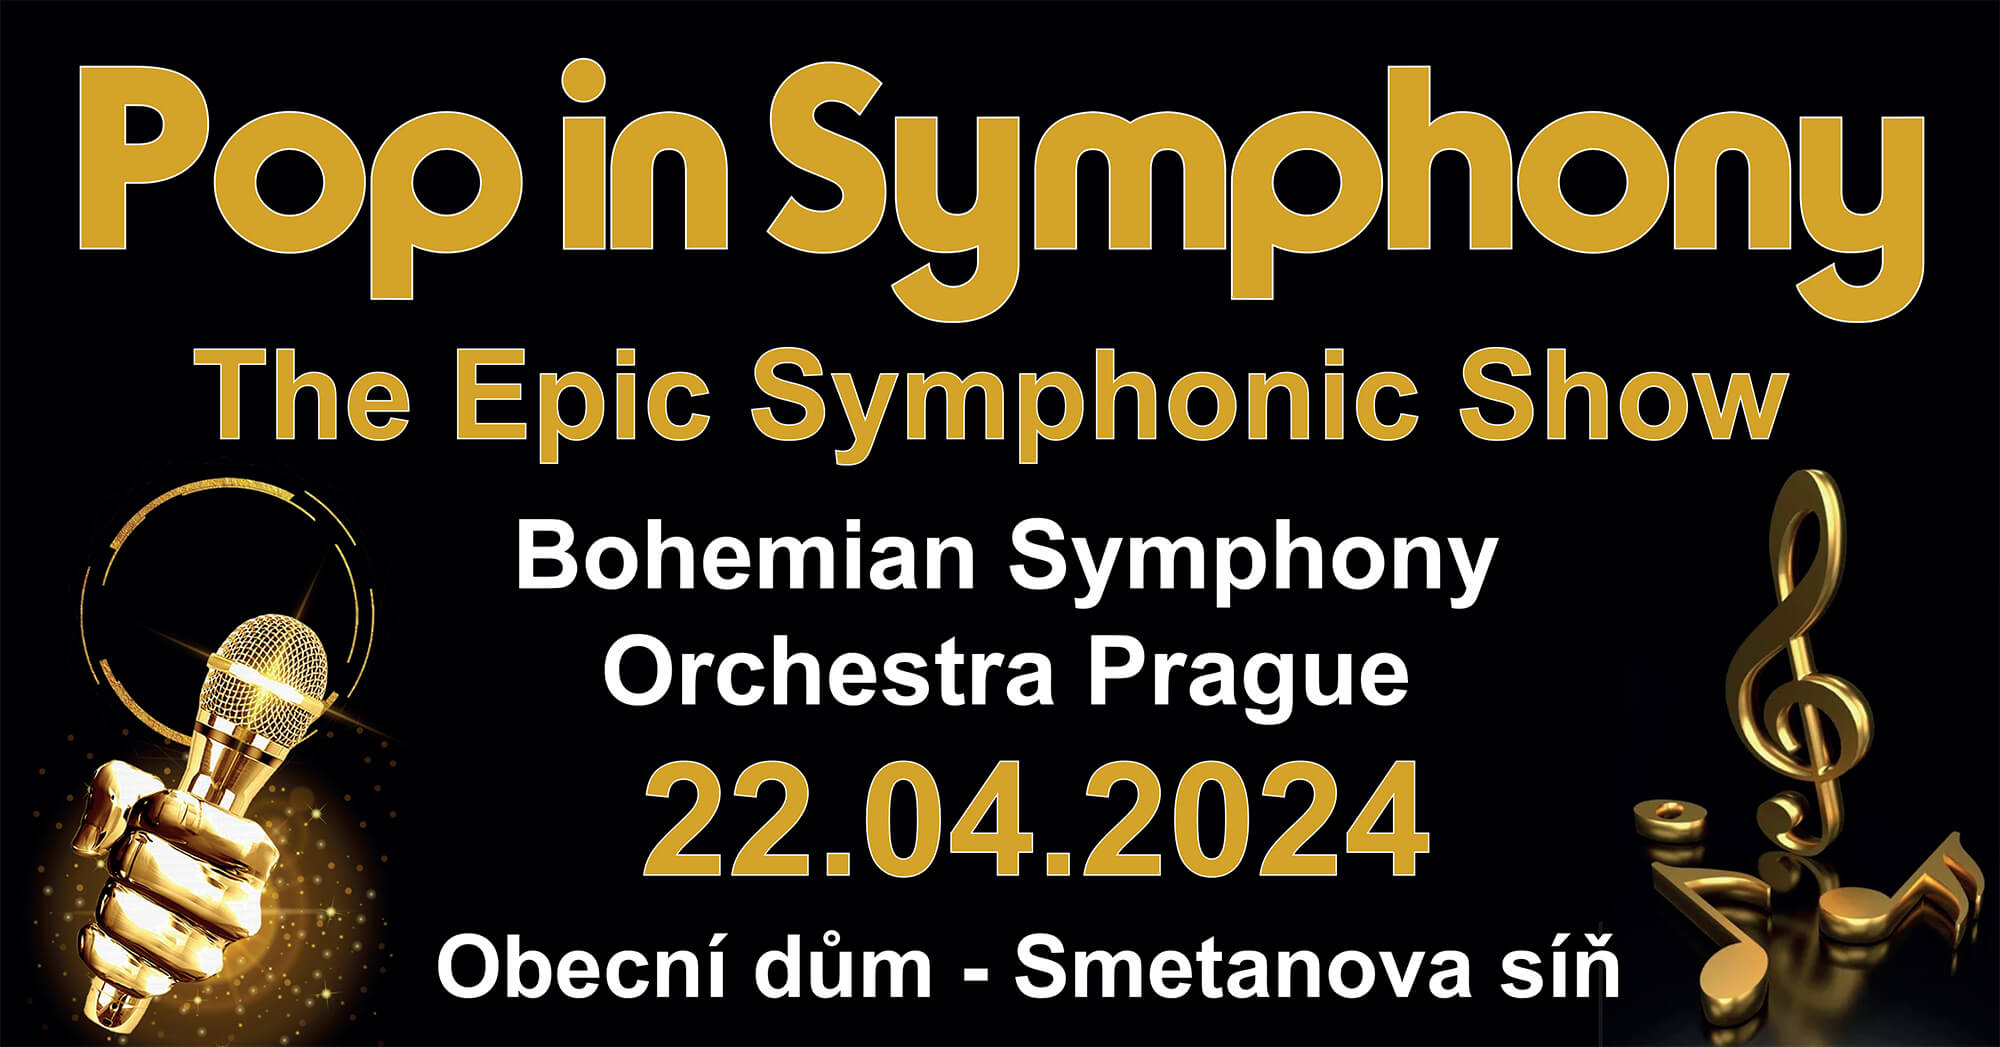 Pop in Symphony: The Epic Symphonic Show 22.04.2024